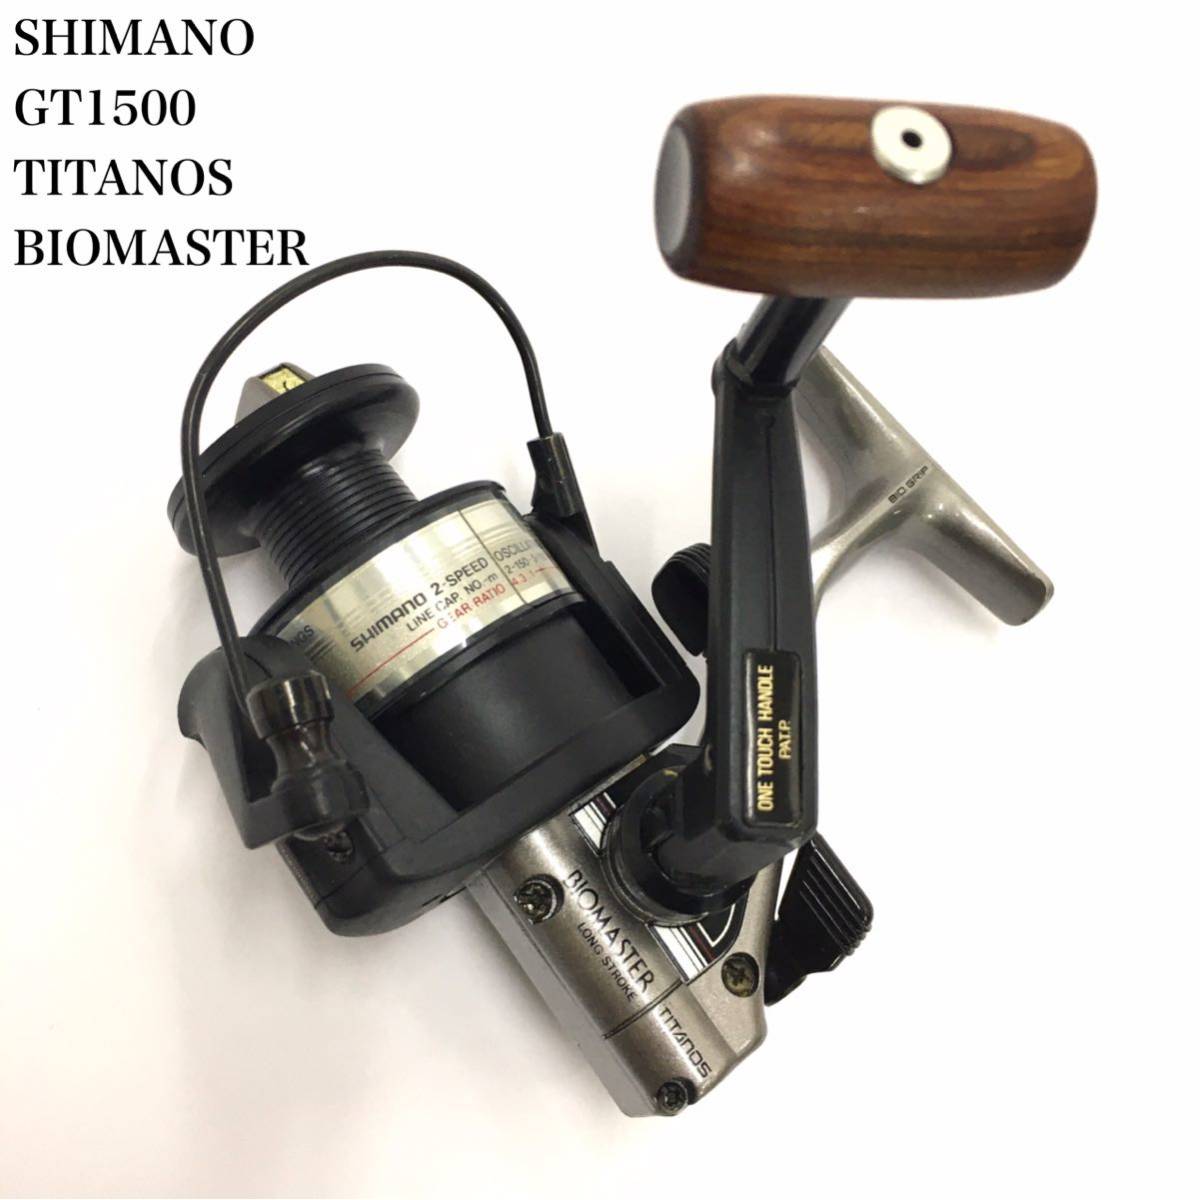 SHIMANO GT1500 TITANOS BIOMASTER シマノ チタノス バイオマスター カーボンコンストラクション スピニングリール 3ボールベアリング 釣具